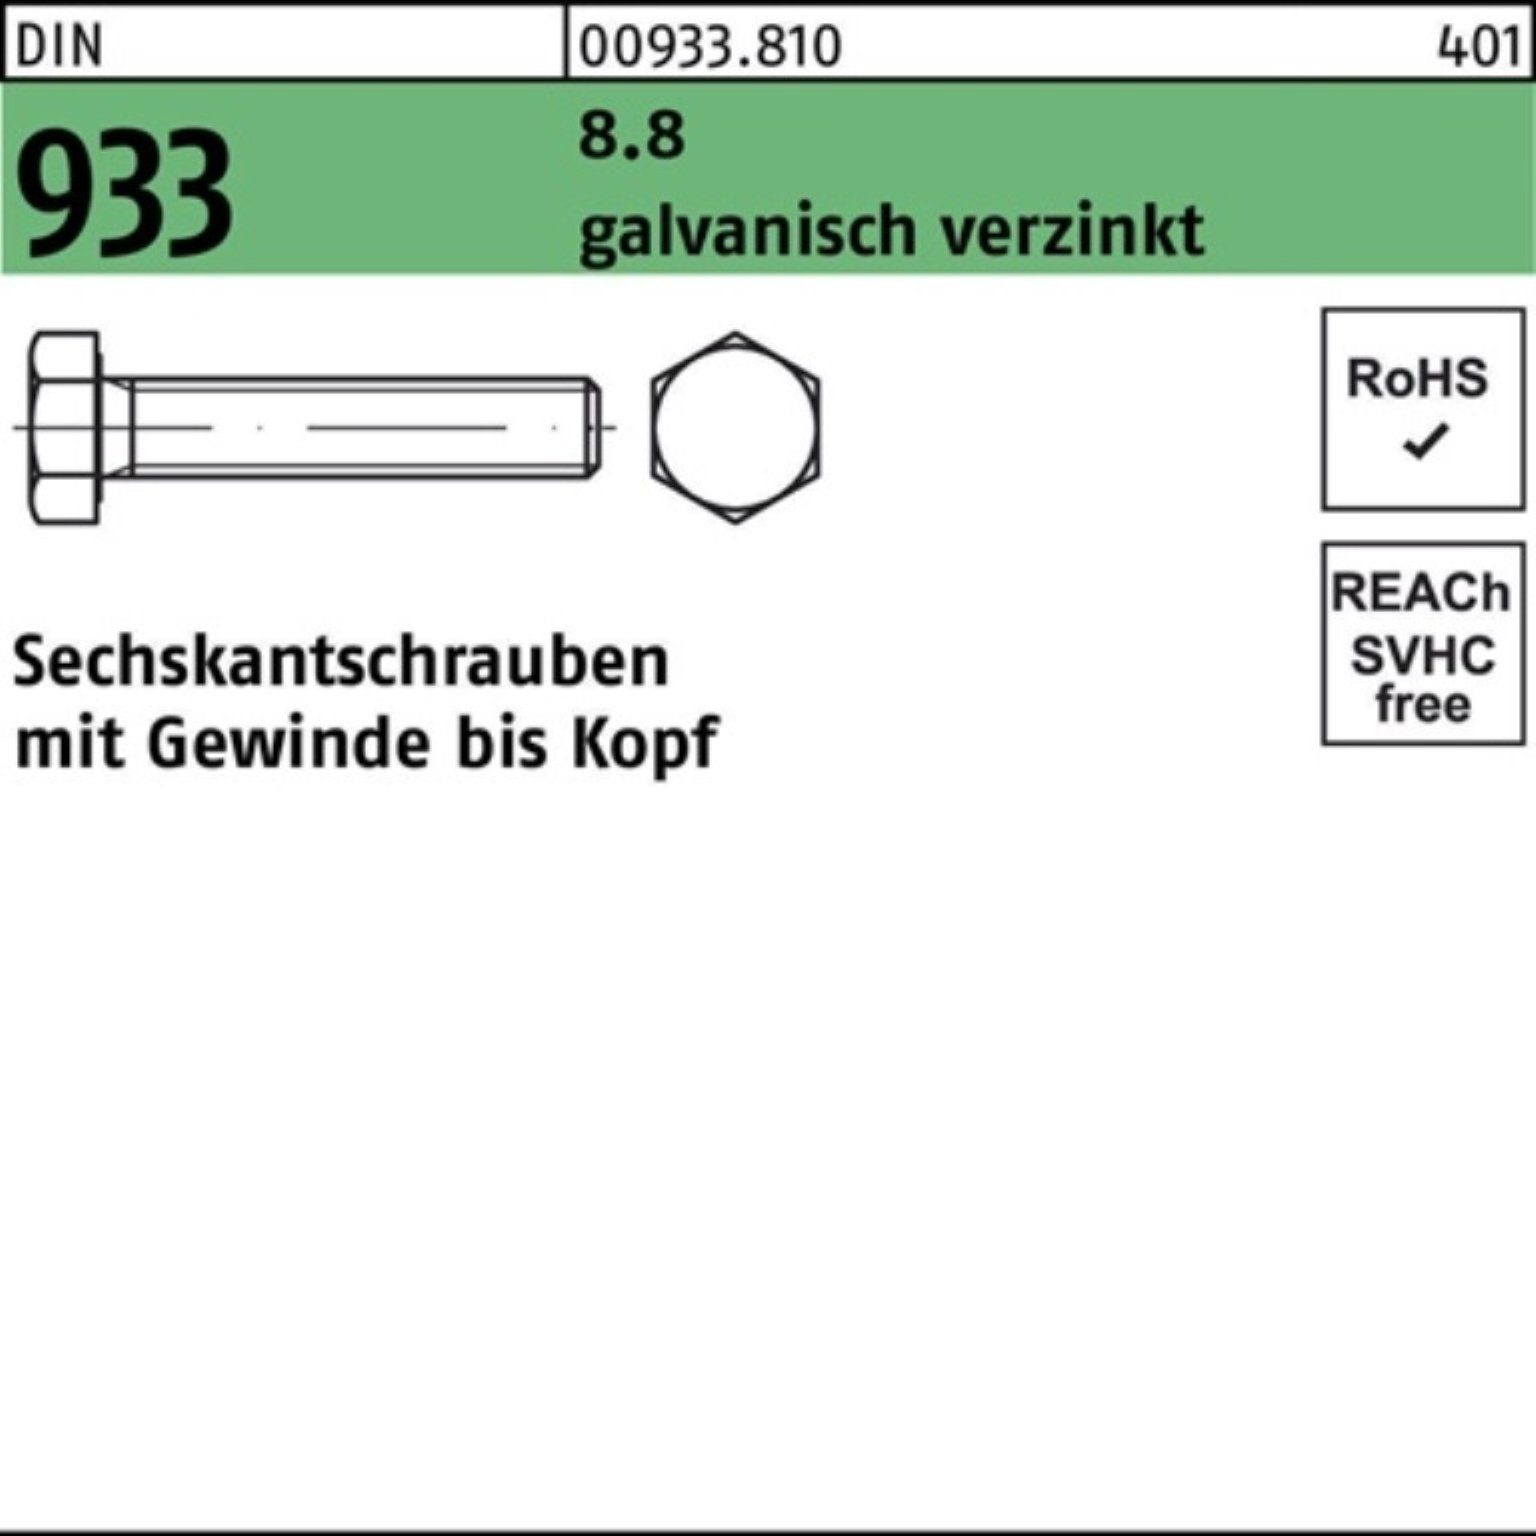 100er VG DIN Sechskantschraube 50 M10x 200 Sechskantschraube galv.verz. Reyher 933 St Pack 8.8